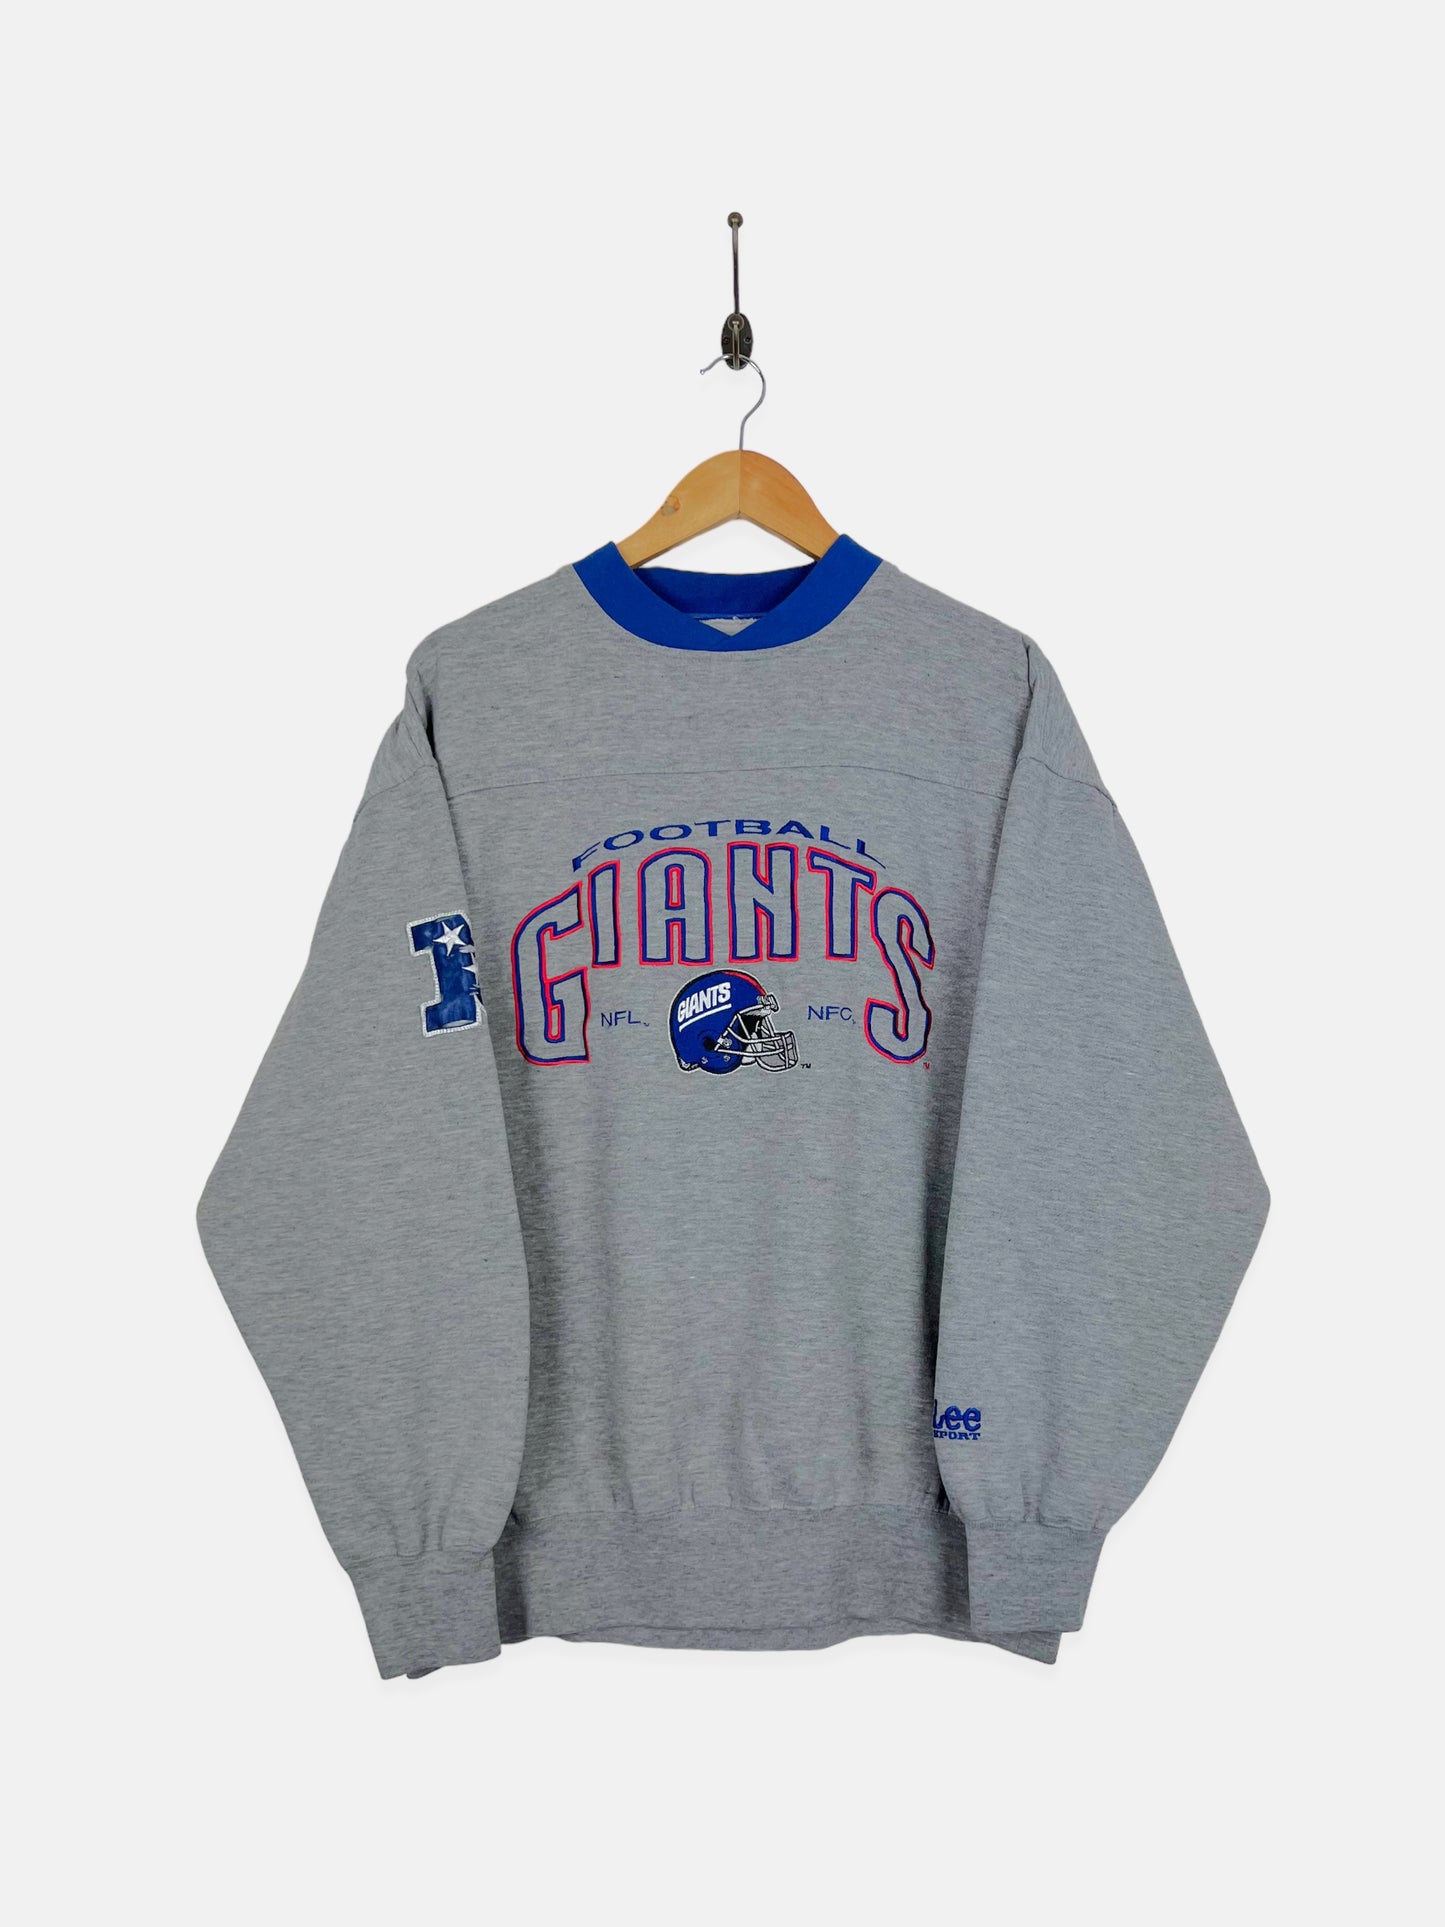 90's New York Giants NFL Embroidered Vintage Sweatshirt Size M-L